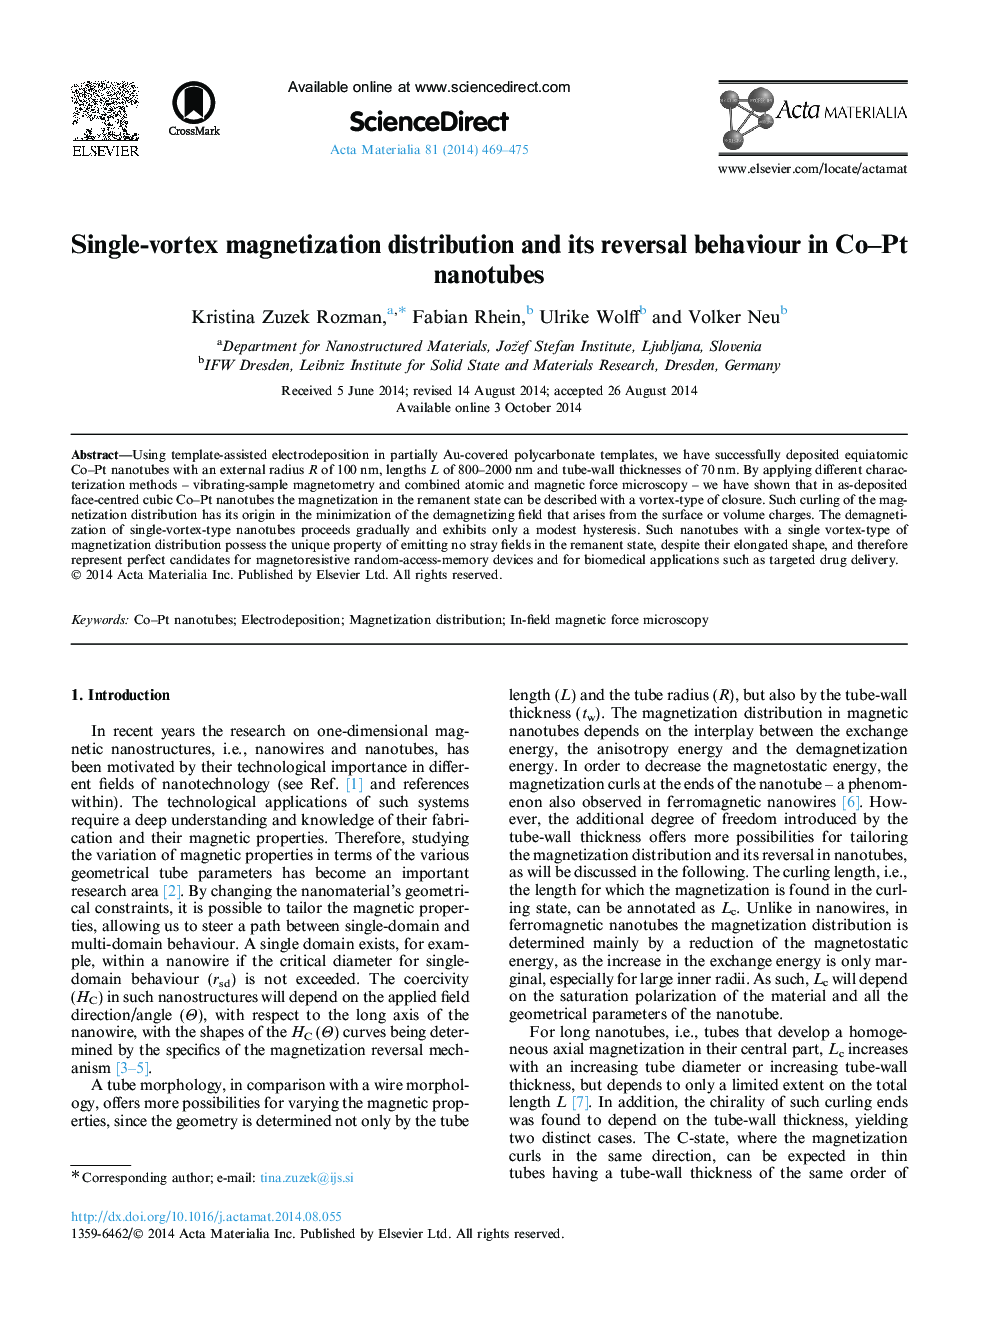 Single-vortex magnetization distribution and its reversal behaviour in Co–Pt nanotubes